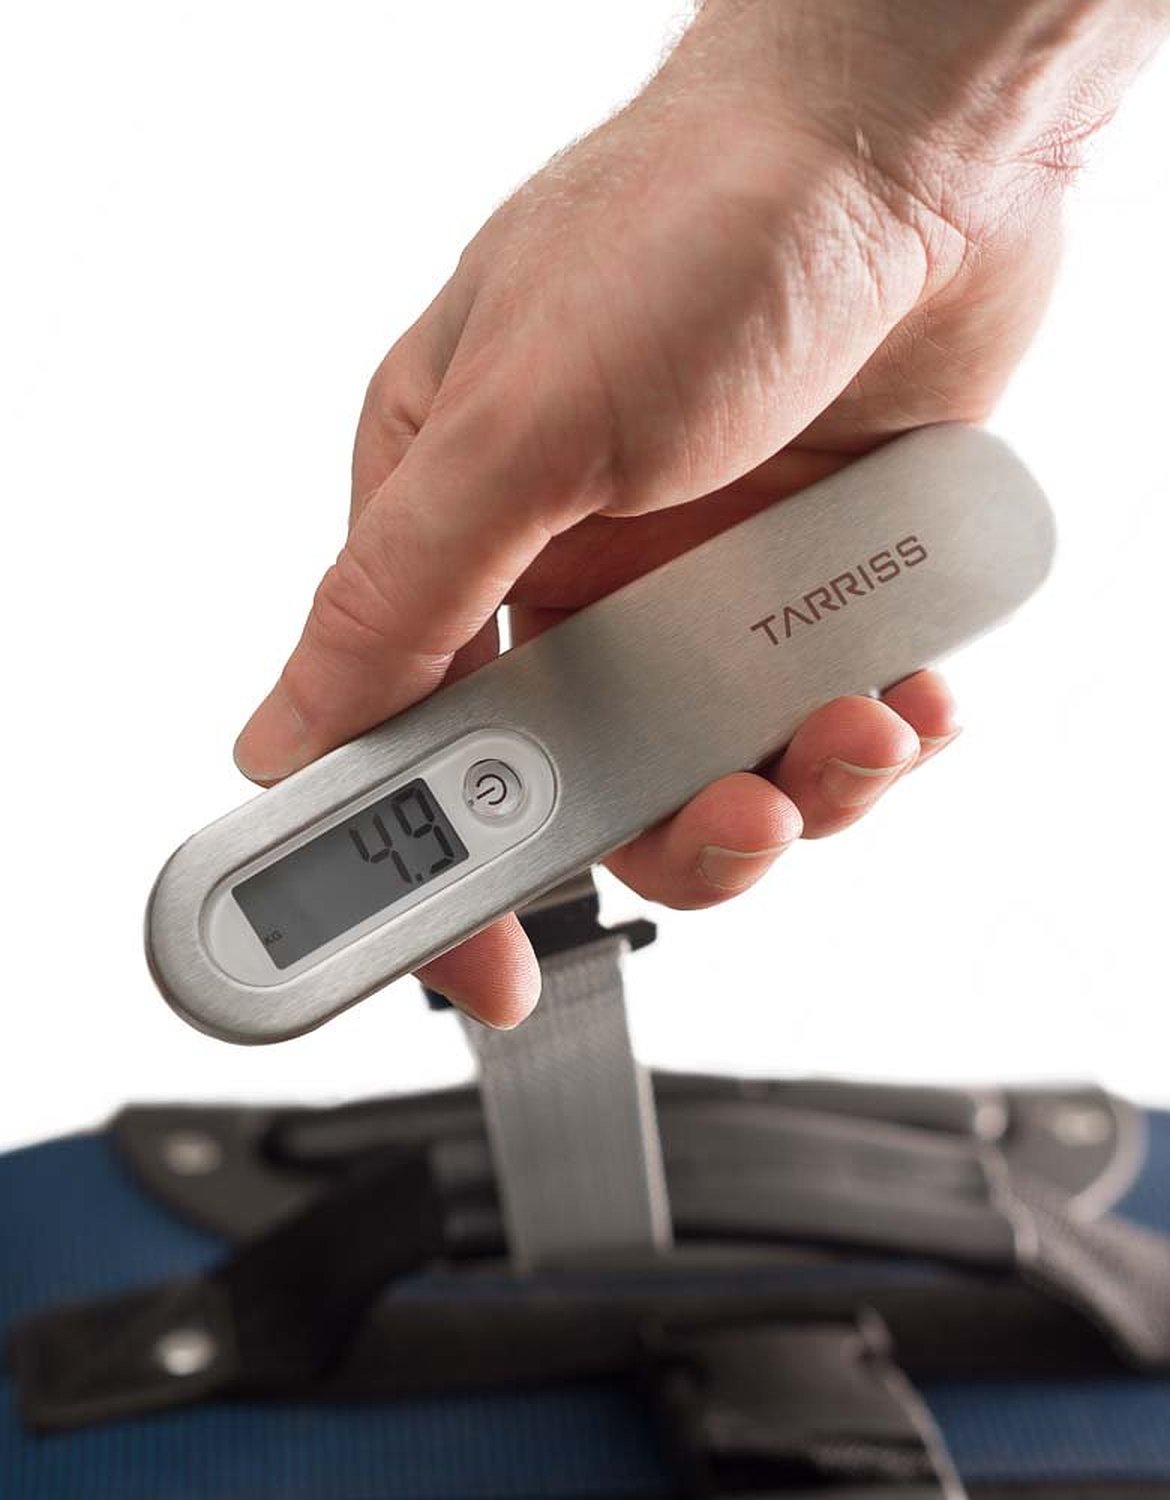 Tarriss Jetsetter Digital Luggage Scale, $16.97